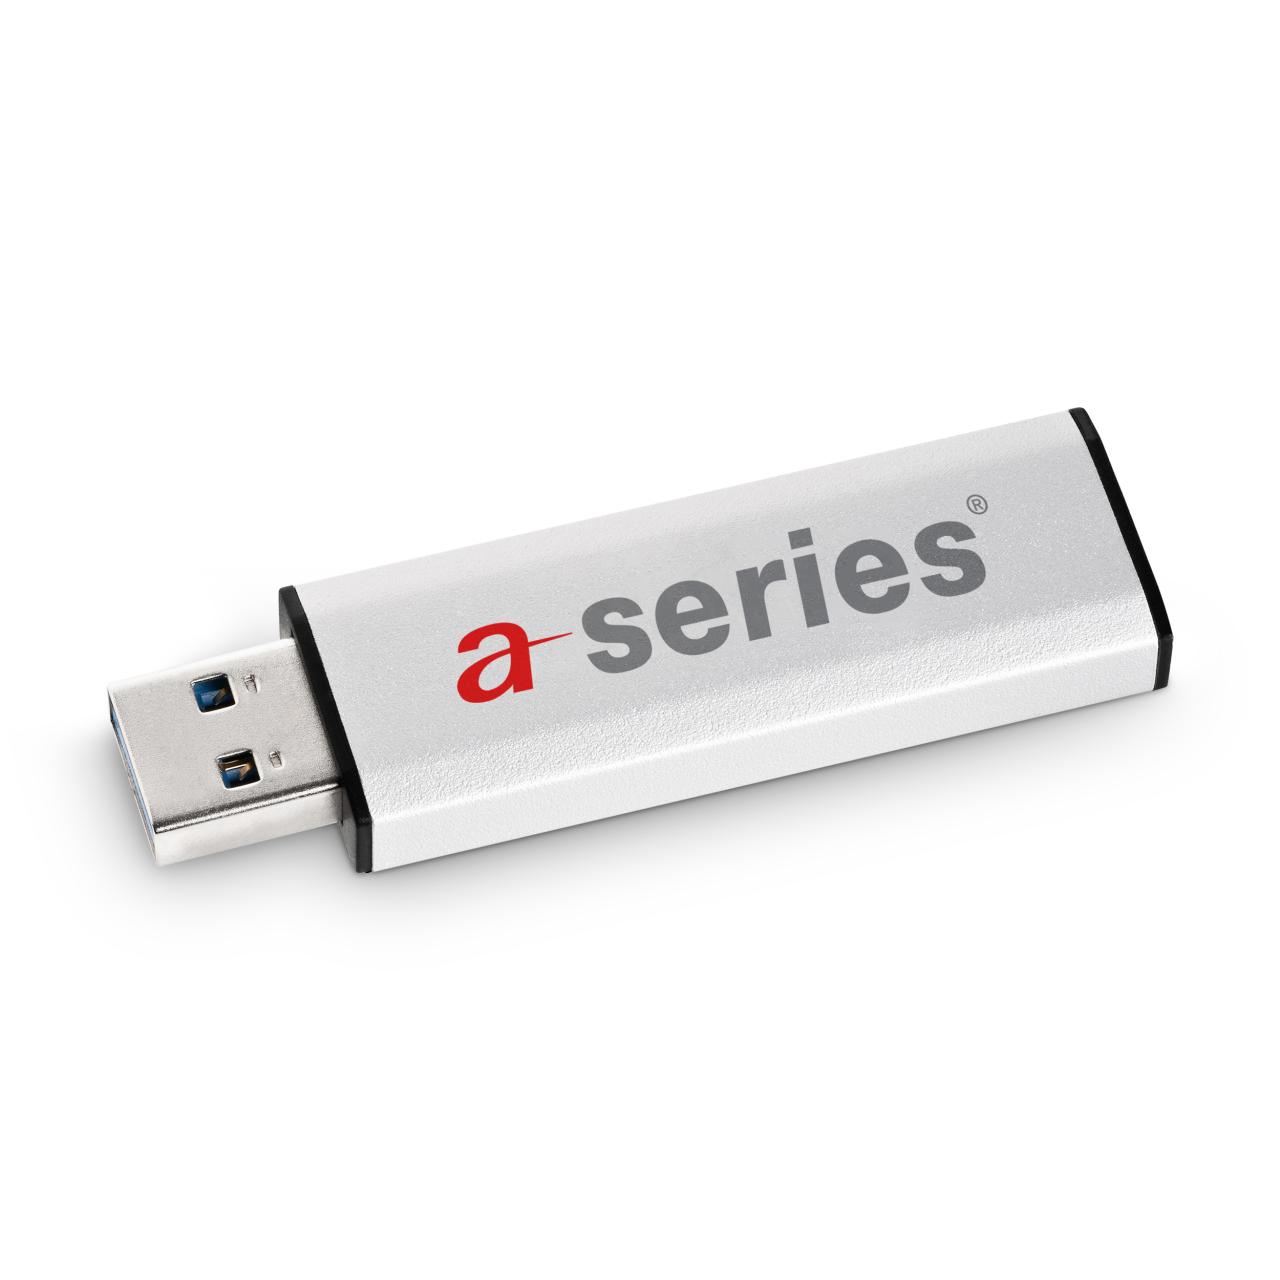 Memorie USB 3.0 A-series, 256GB, alb